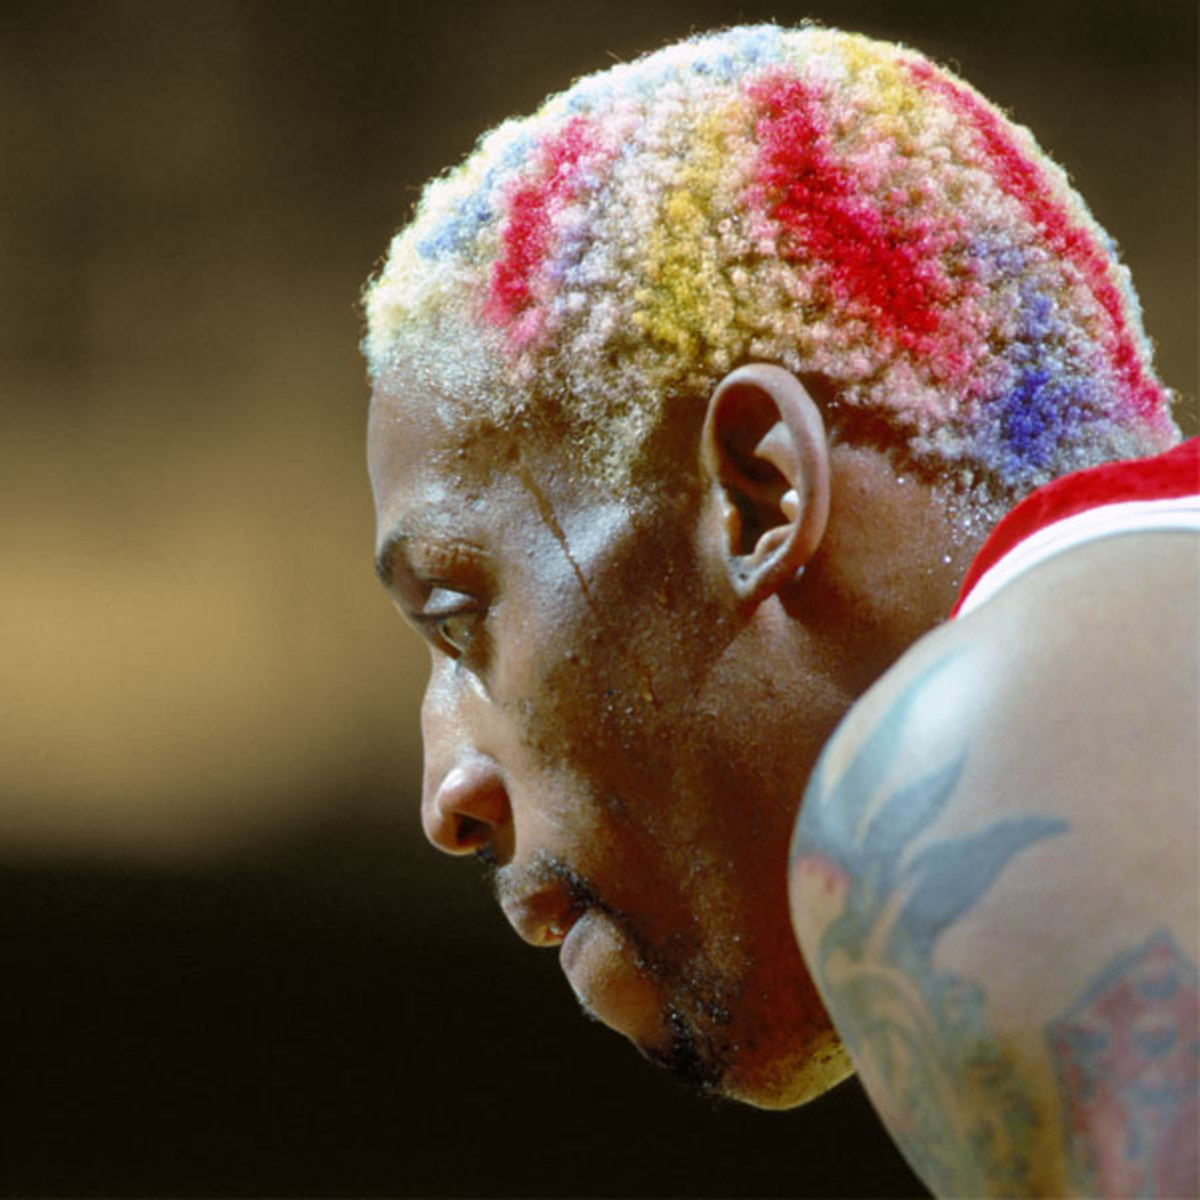 HallofFame: Dennis Rodman's hair.